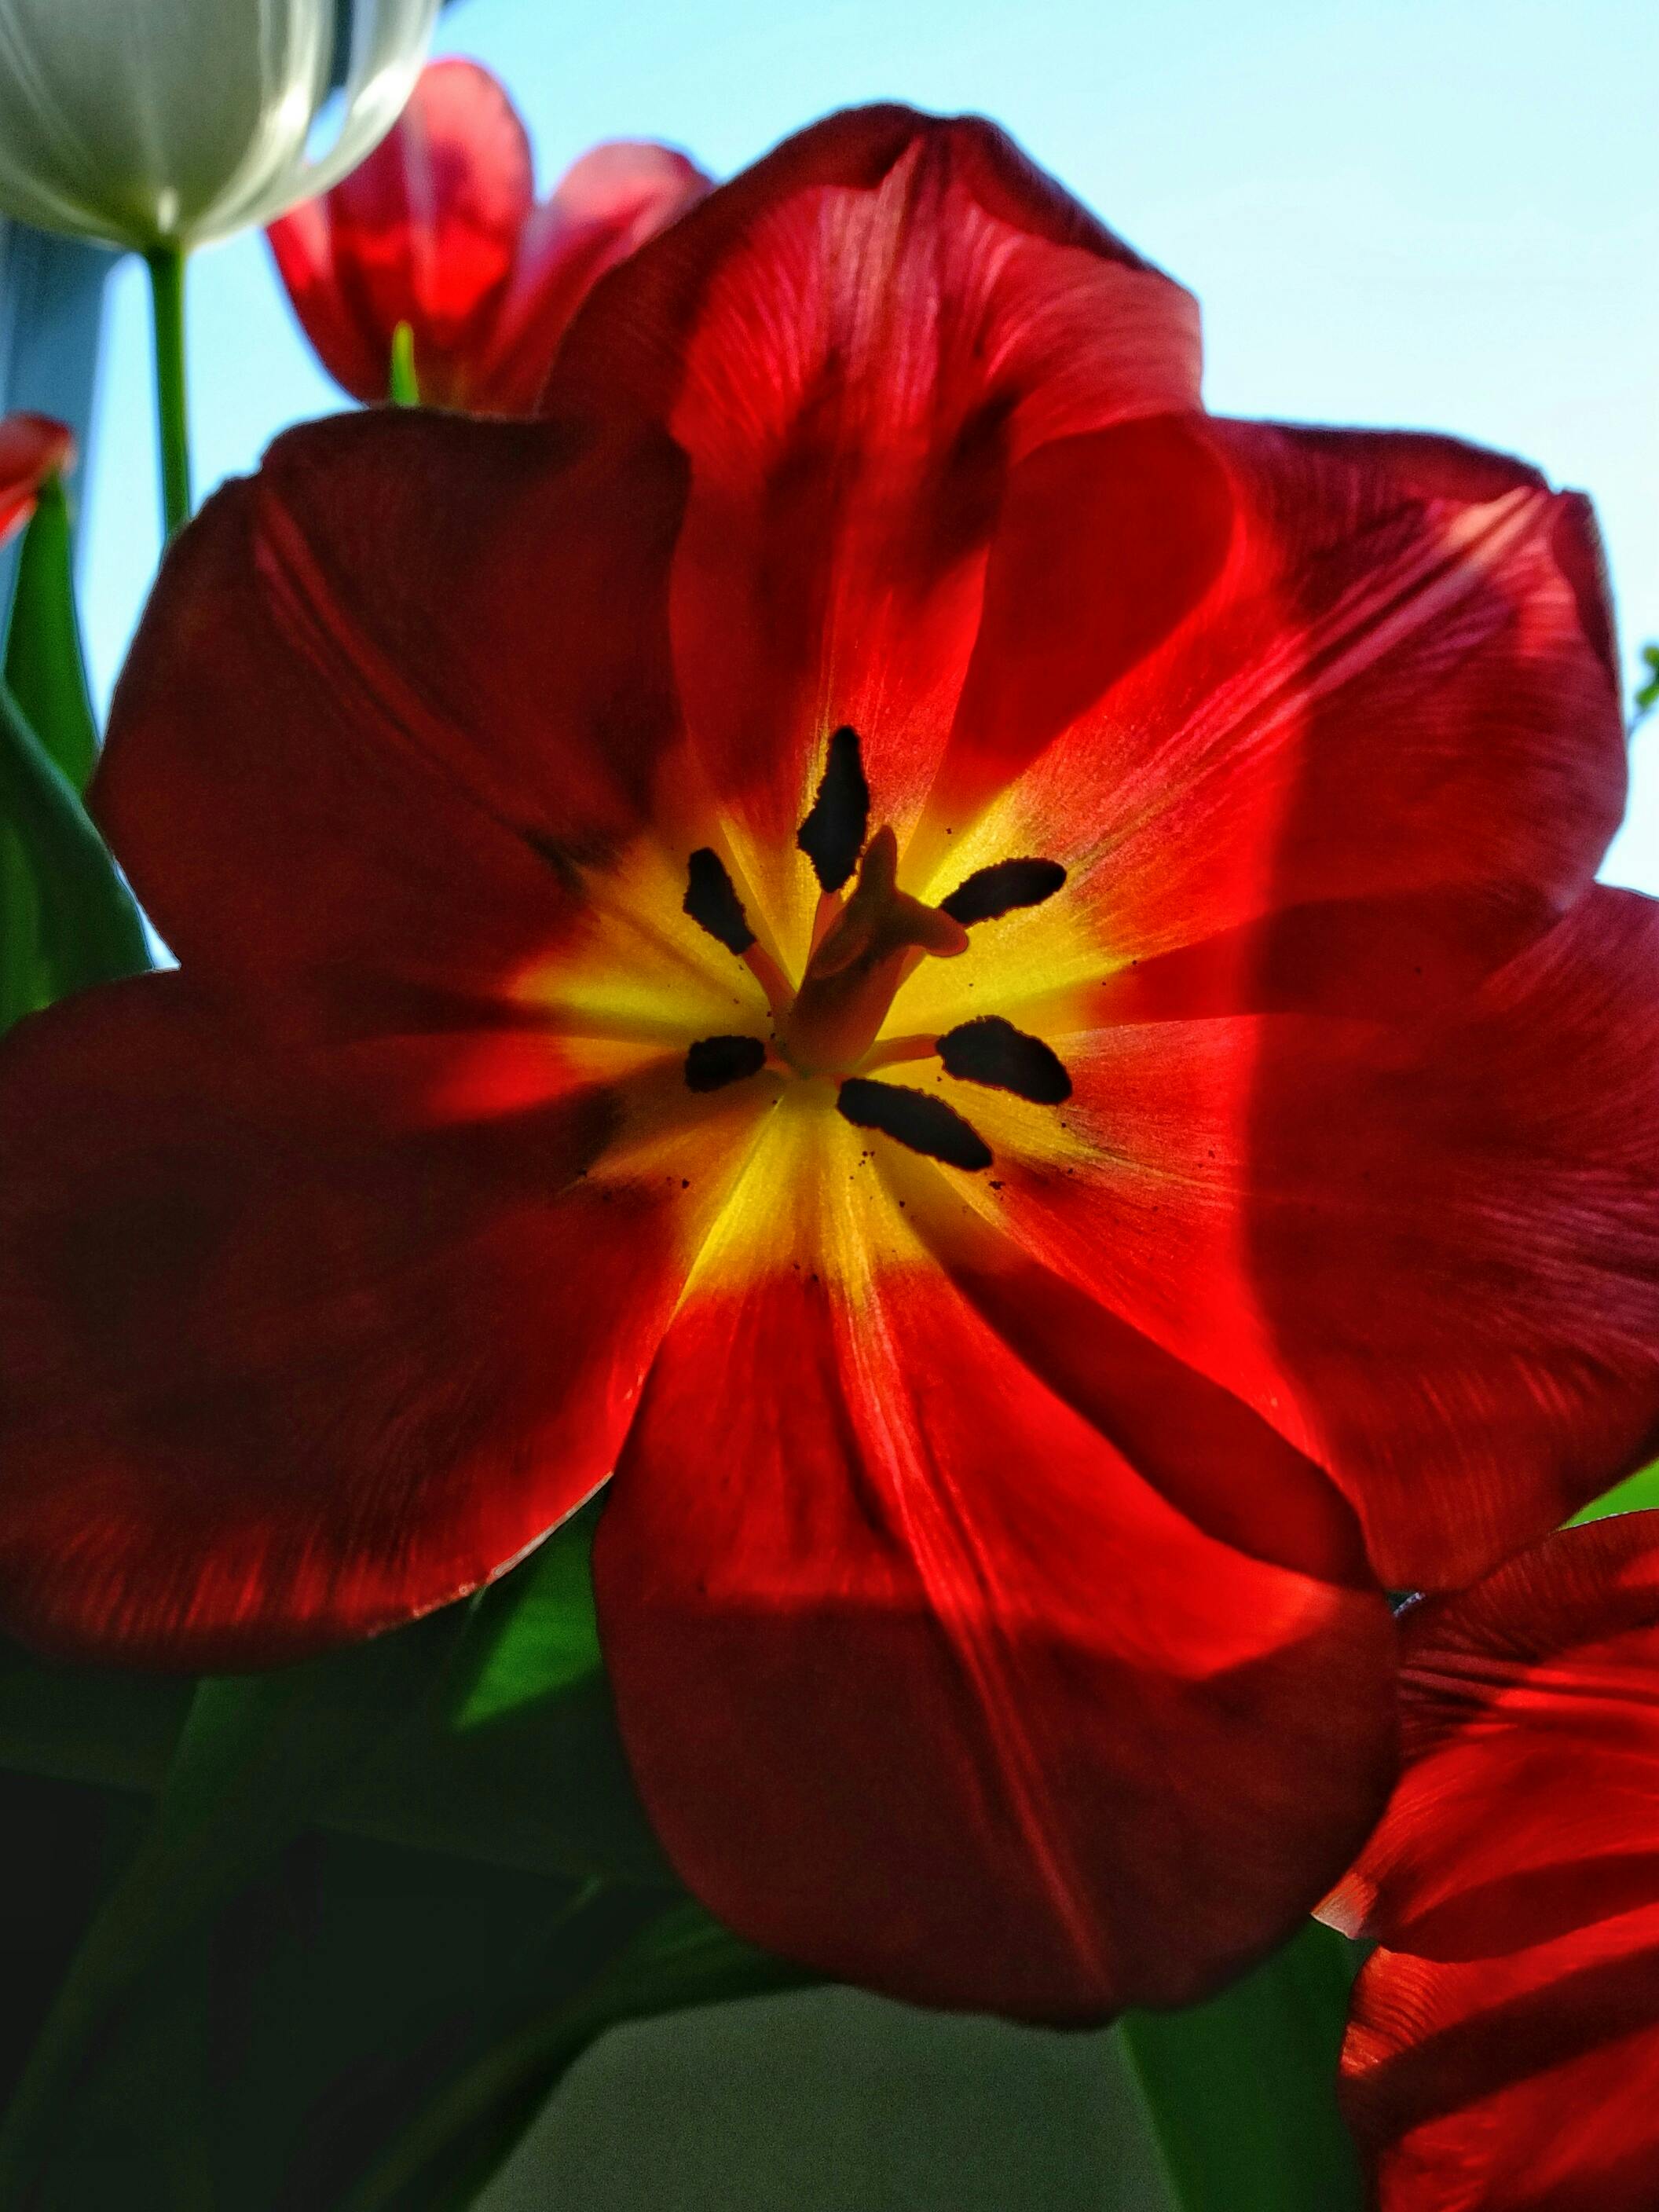 Free stock photo of #minimalist #tulip #flower #red